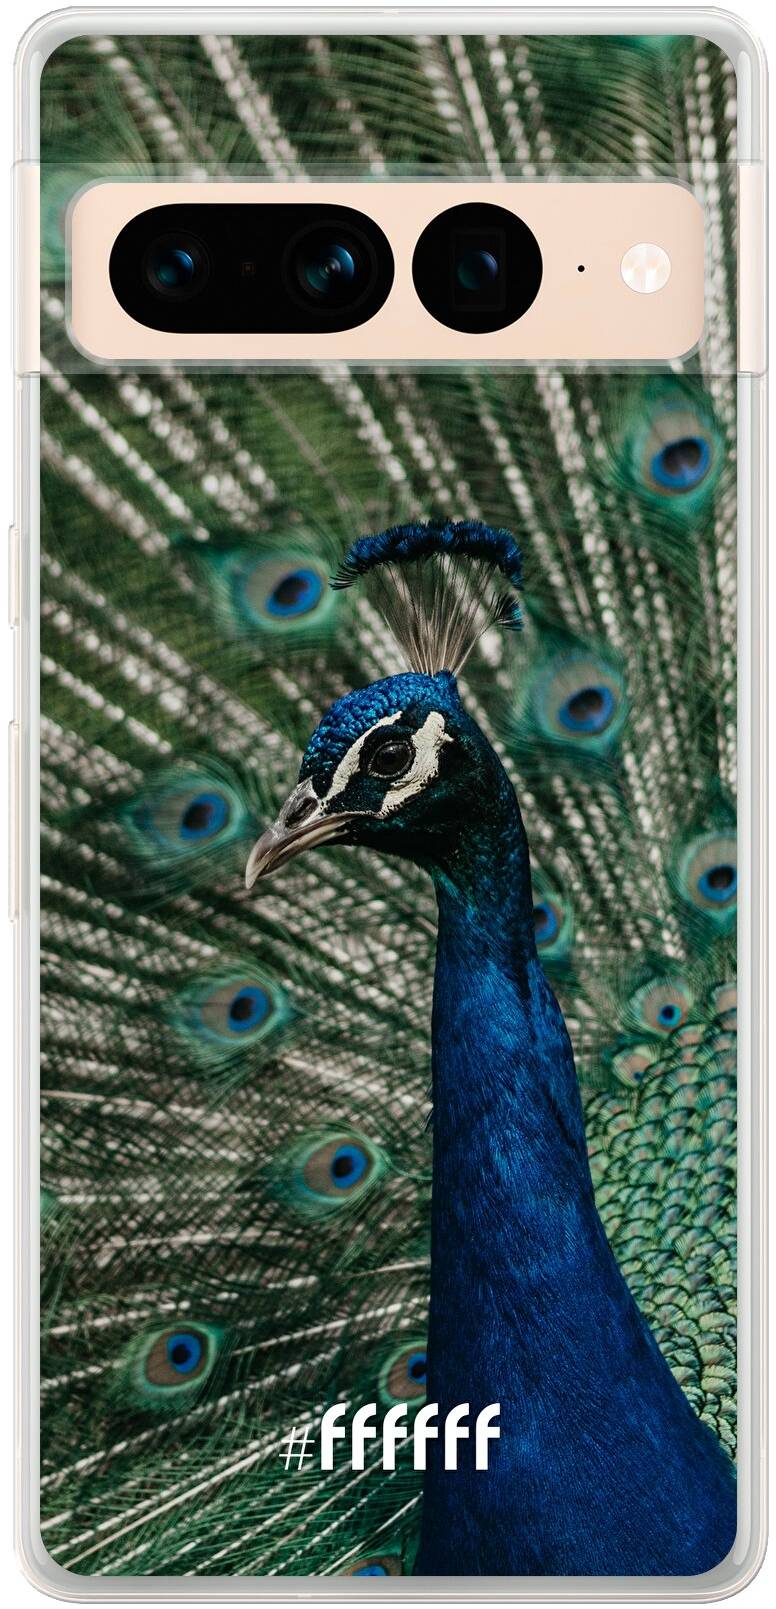 Peacock Pixel 7 Pro